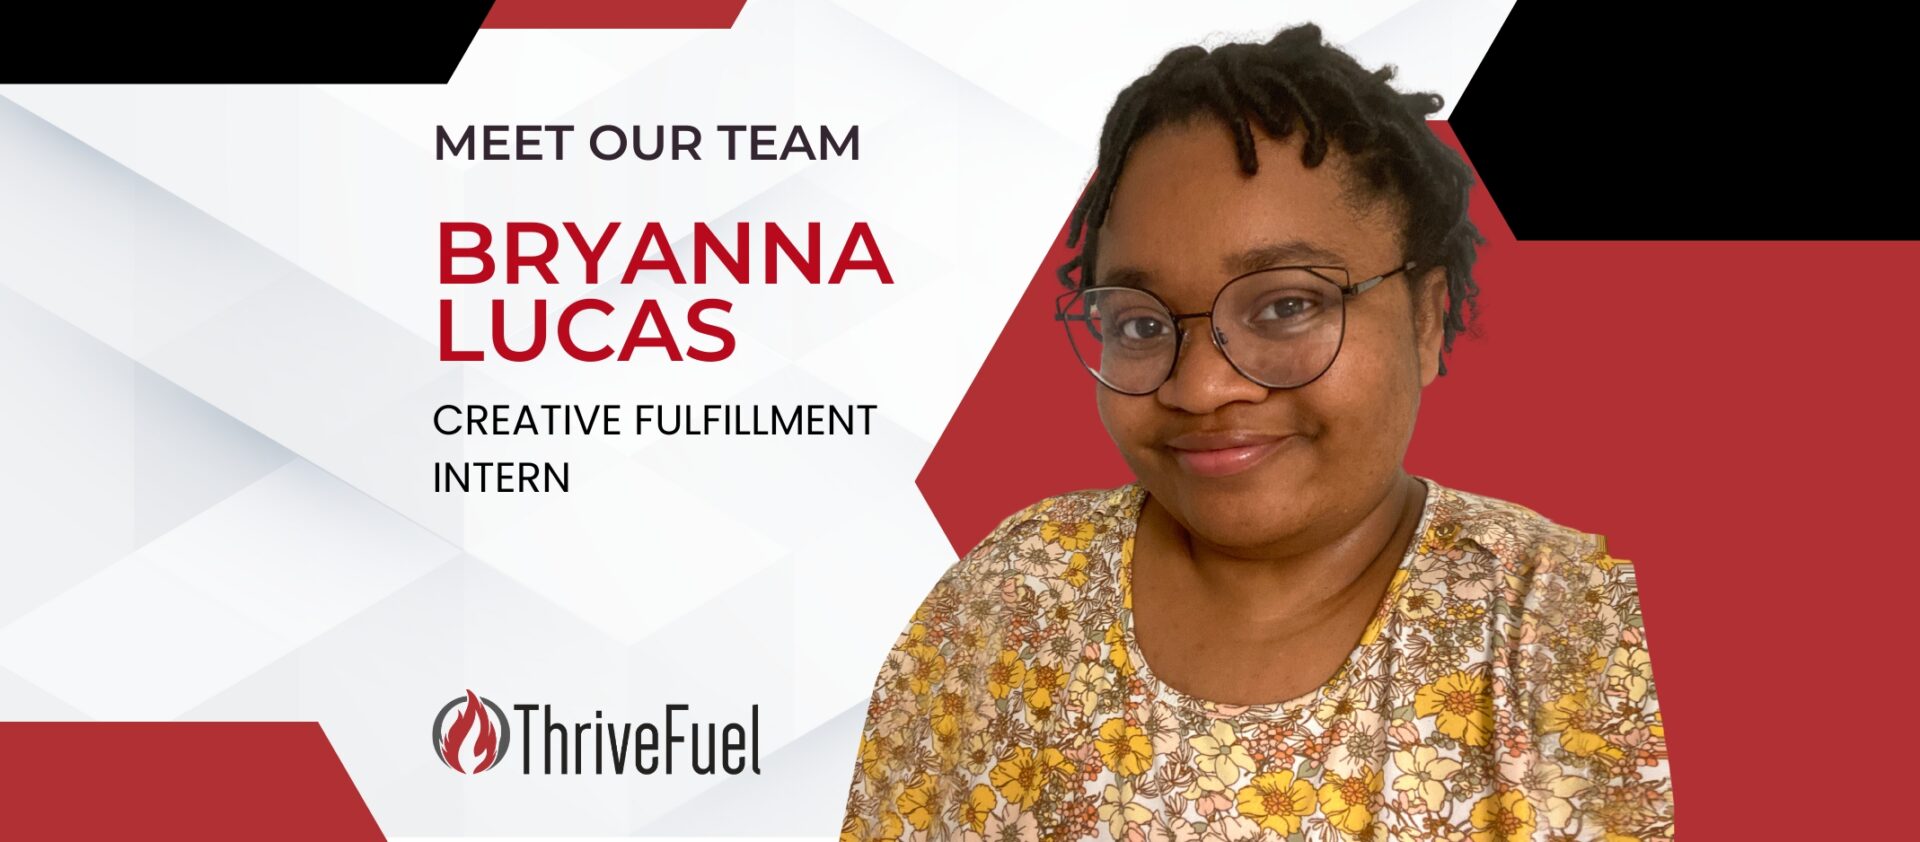 Introducing Bryanna Lucas, ThriveFuel’s New Creative Fulfillment Intern!